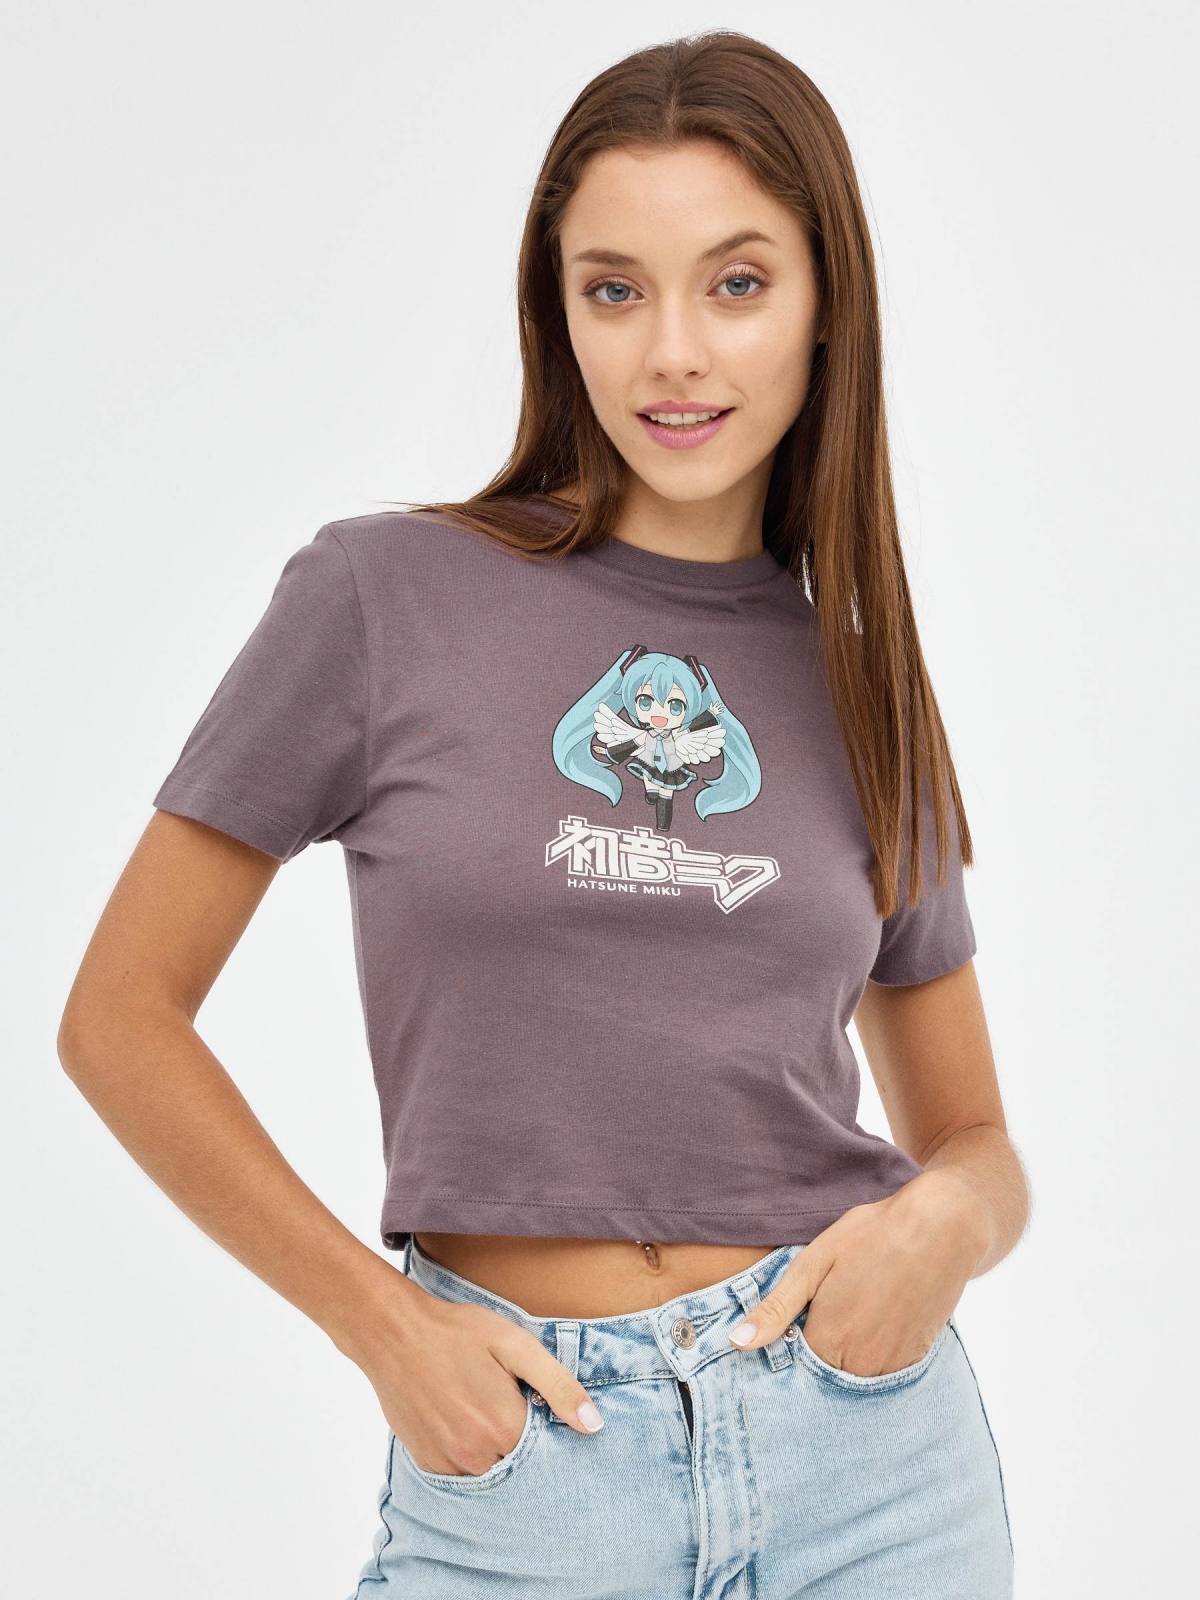 Hatsune print T-shirt | Women's T-Shirts | INSIDE